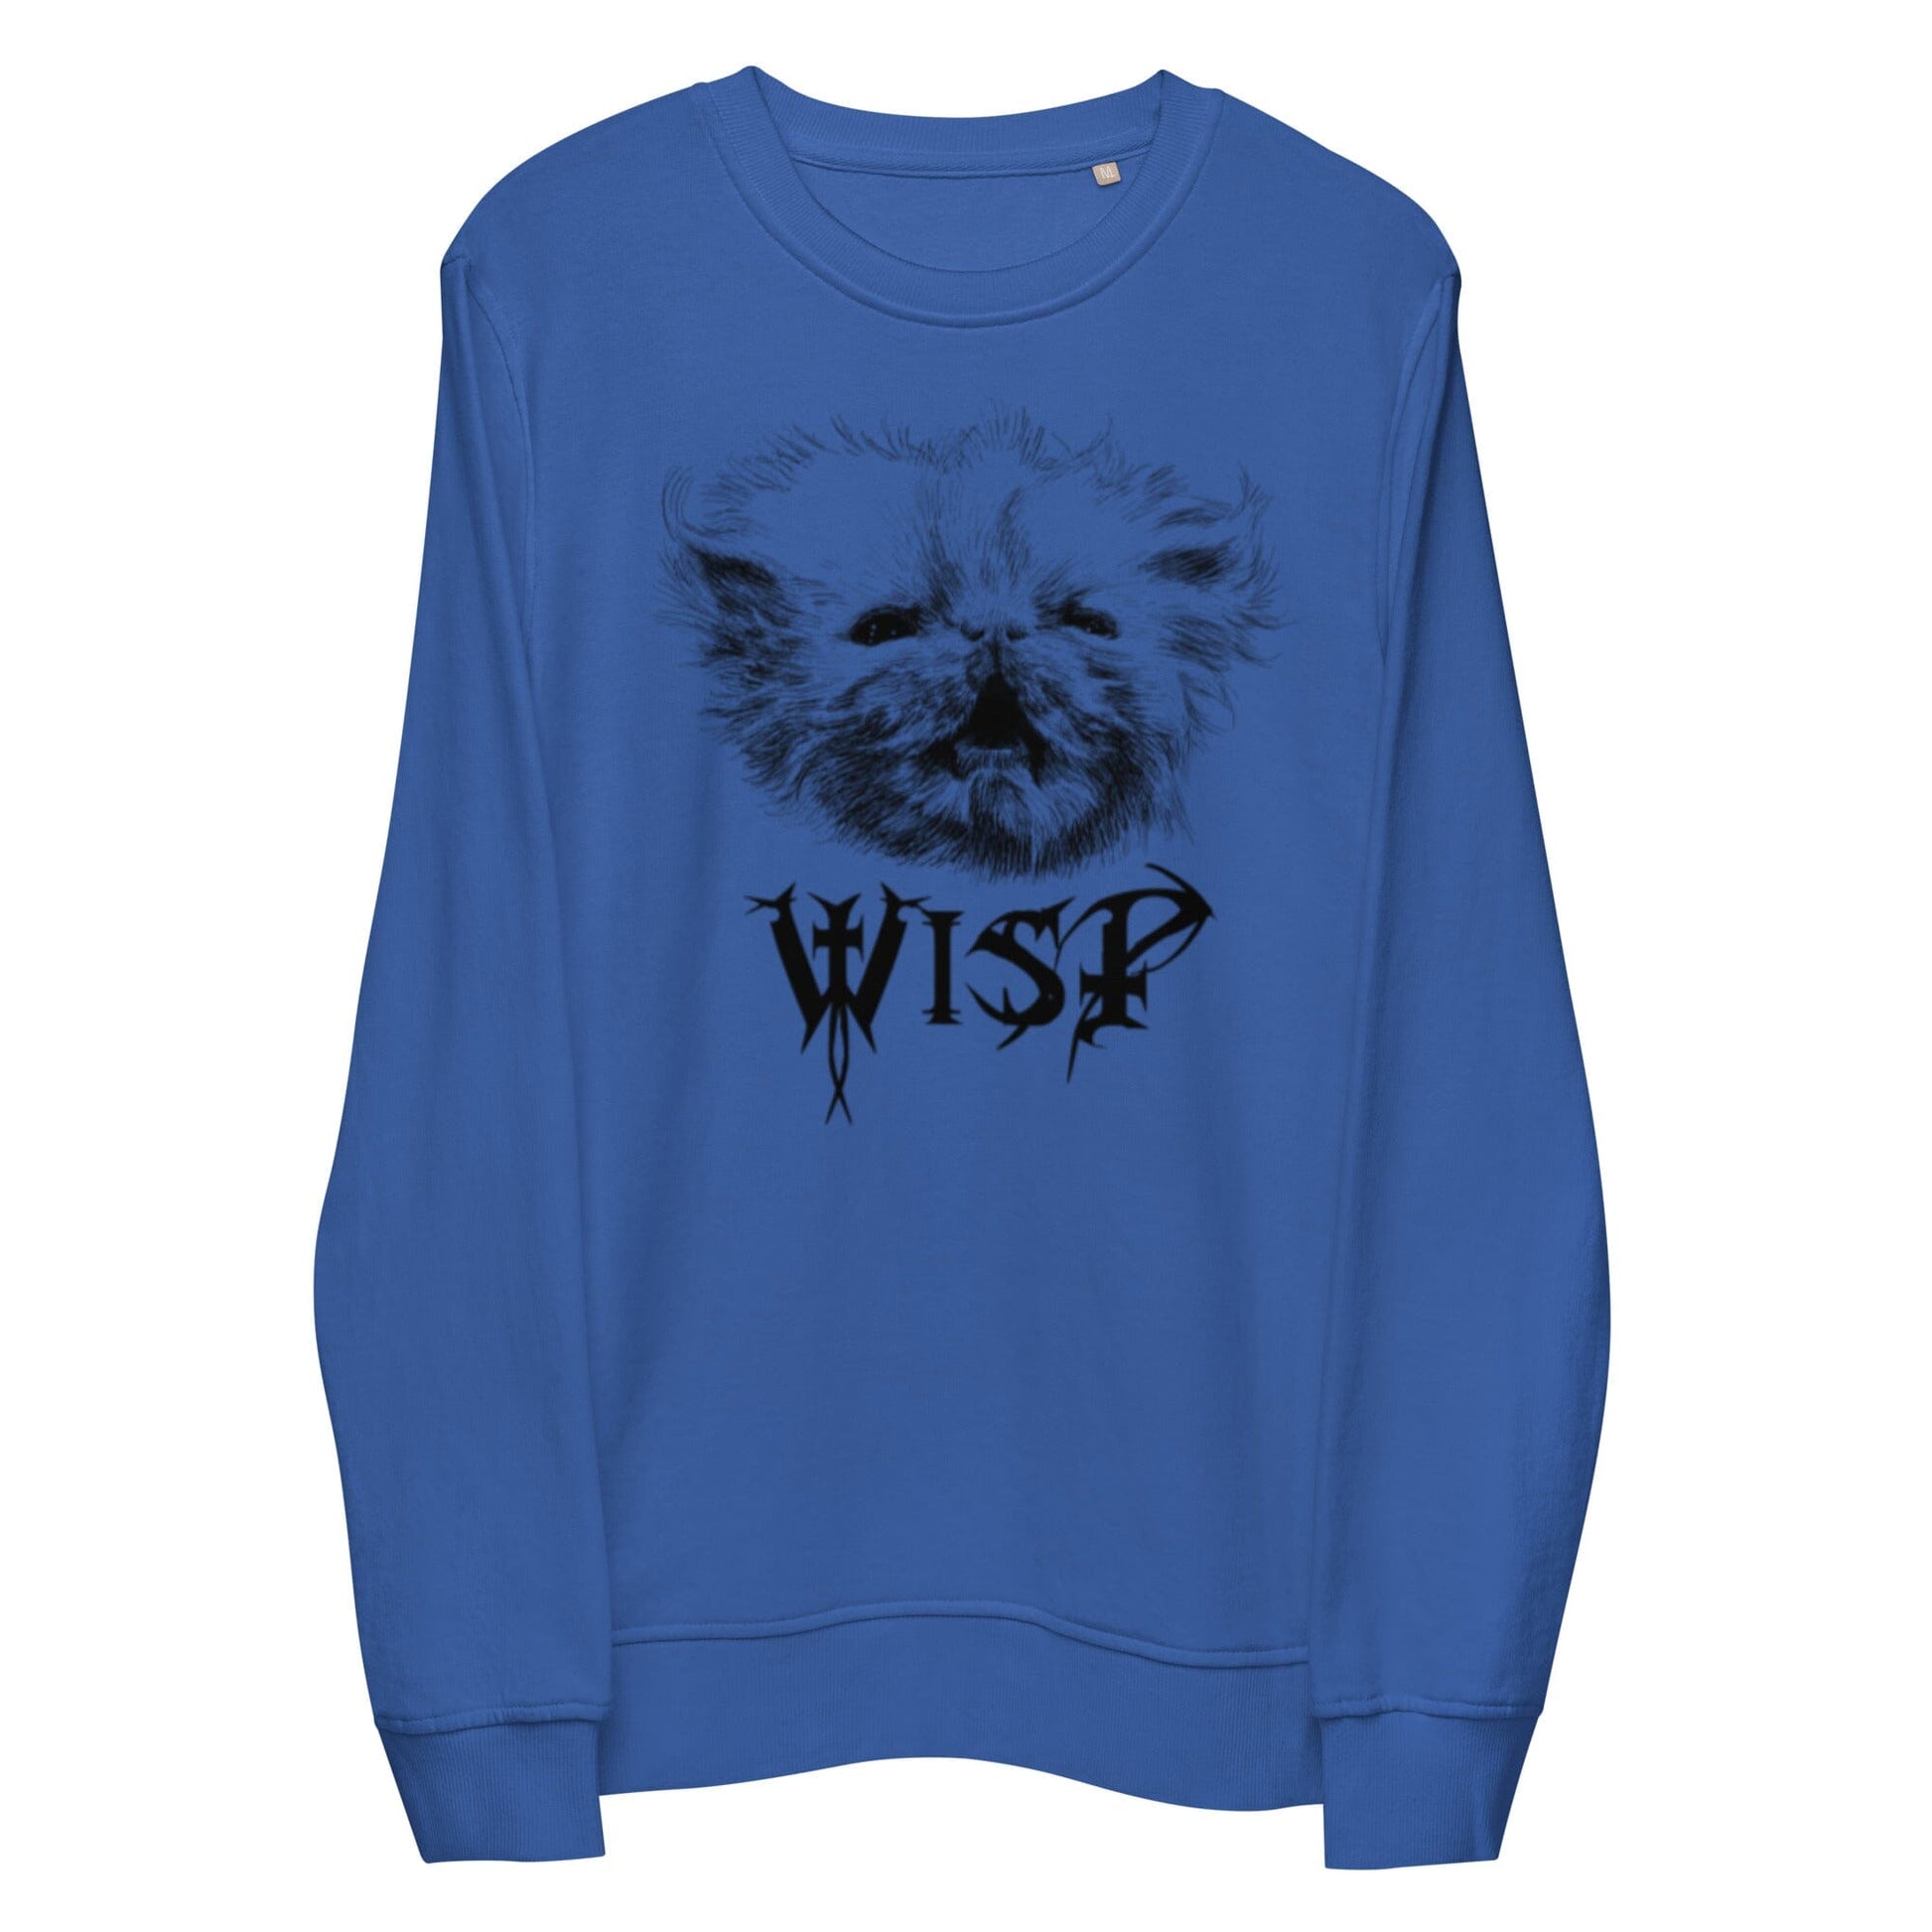 Metal Wisp Sweatshirt [Unfoiled] (All net proceeds go to Rags to Riches Animal Rescue) JoyousJoyfulJoyness Royal Blue S 